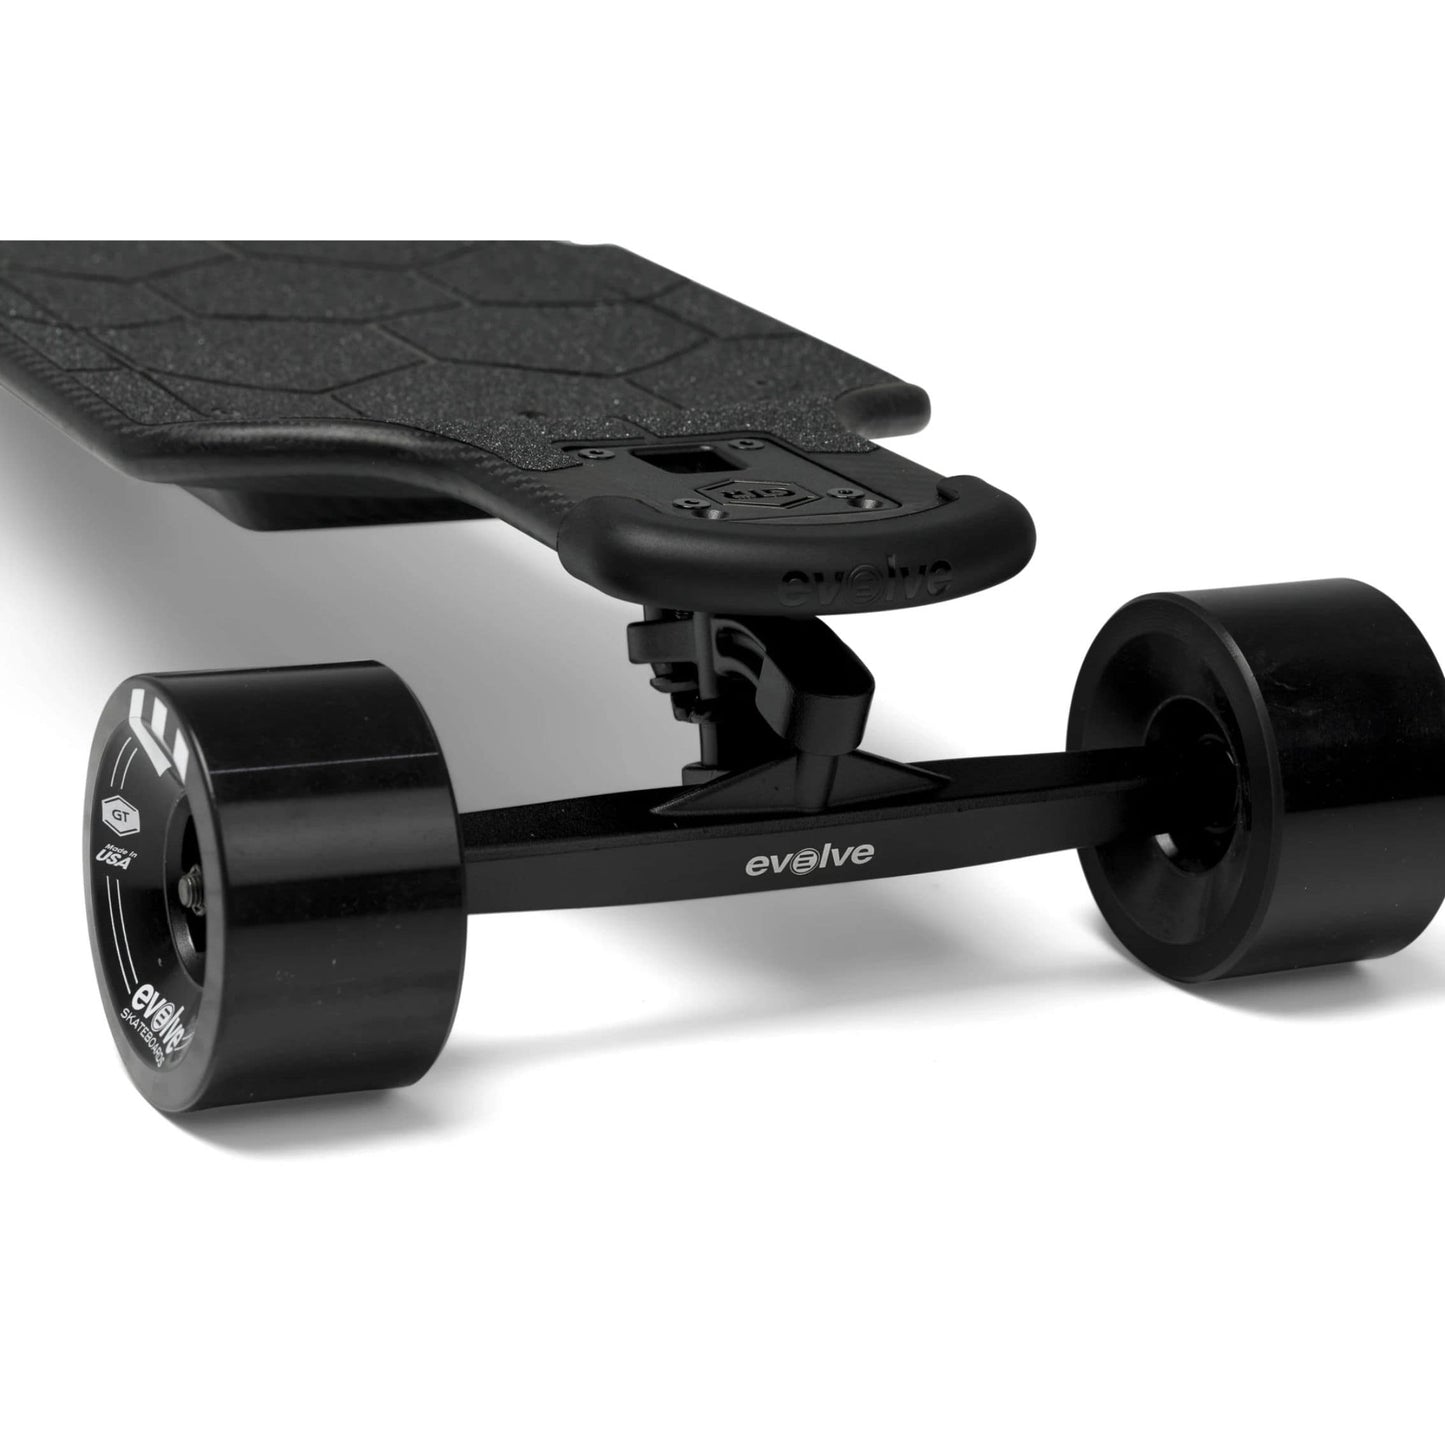 Evolve Carbon GTR Street Electric Skateboard